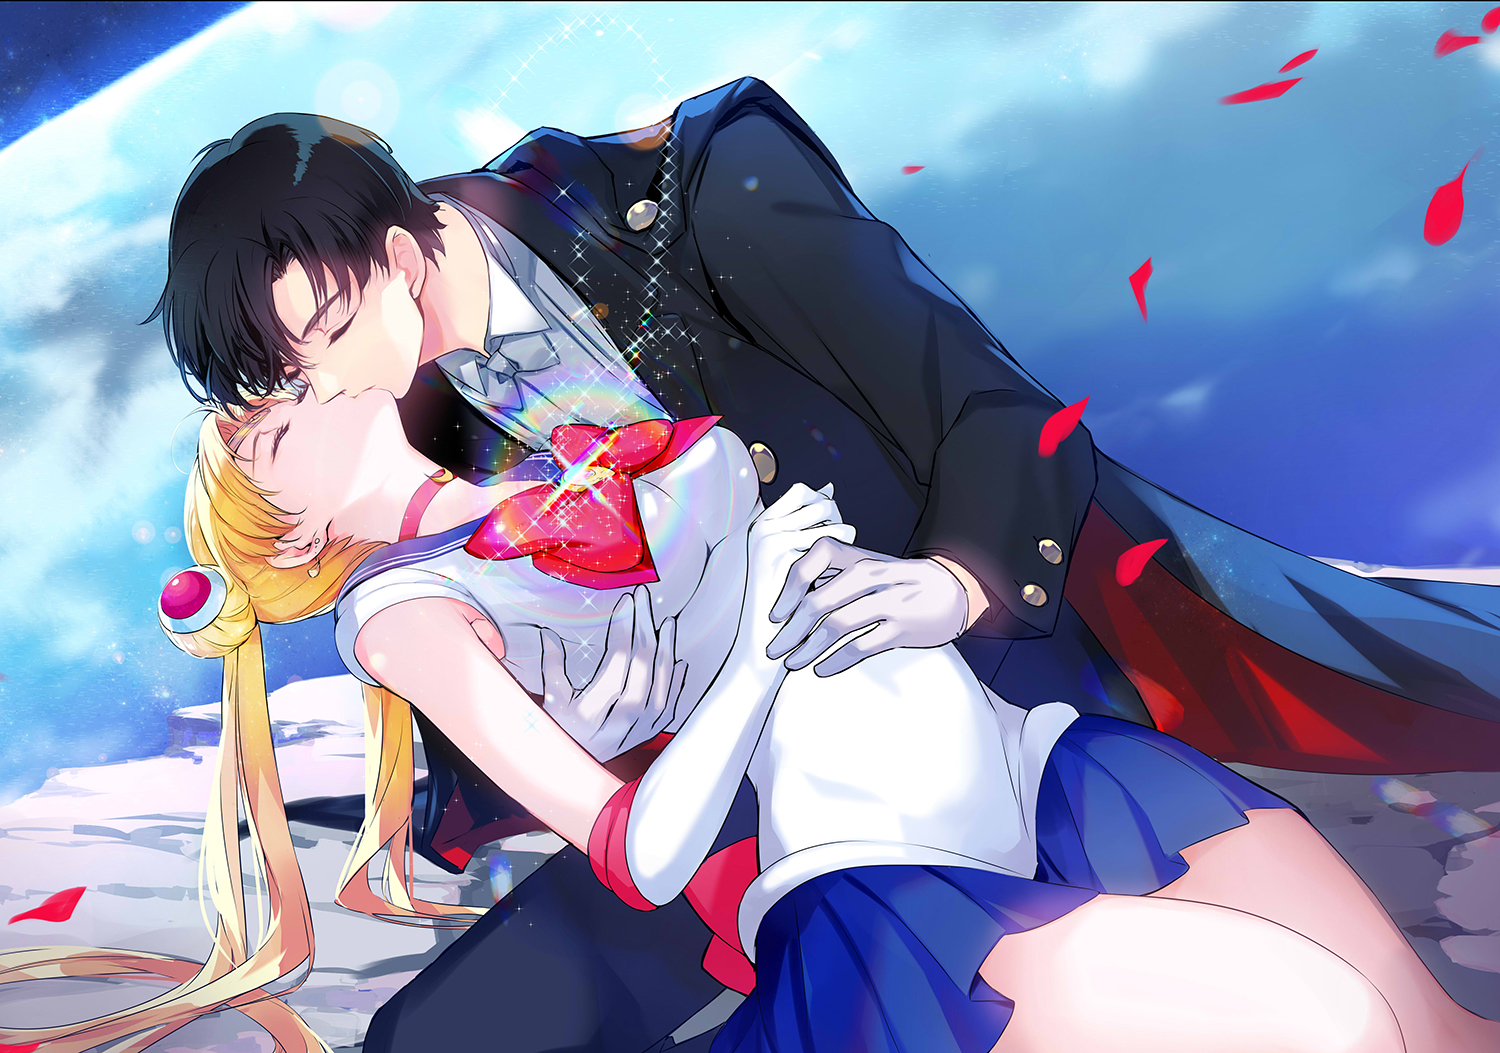 Tsukino Usagi Sailor Moon Black Hair Blonde Closed Eyes Kissing Twintails Skirt Cape Elbow Gloves Lo 1500x1053